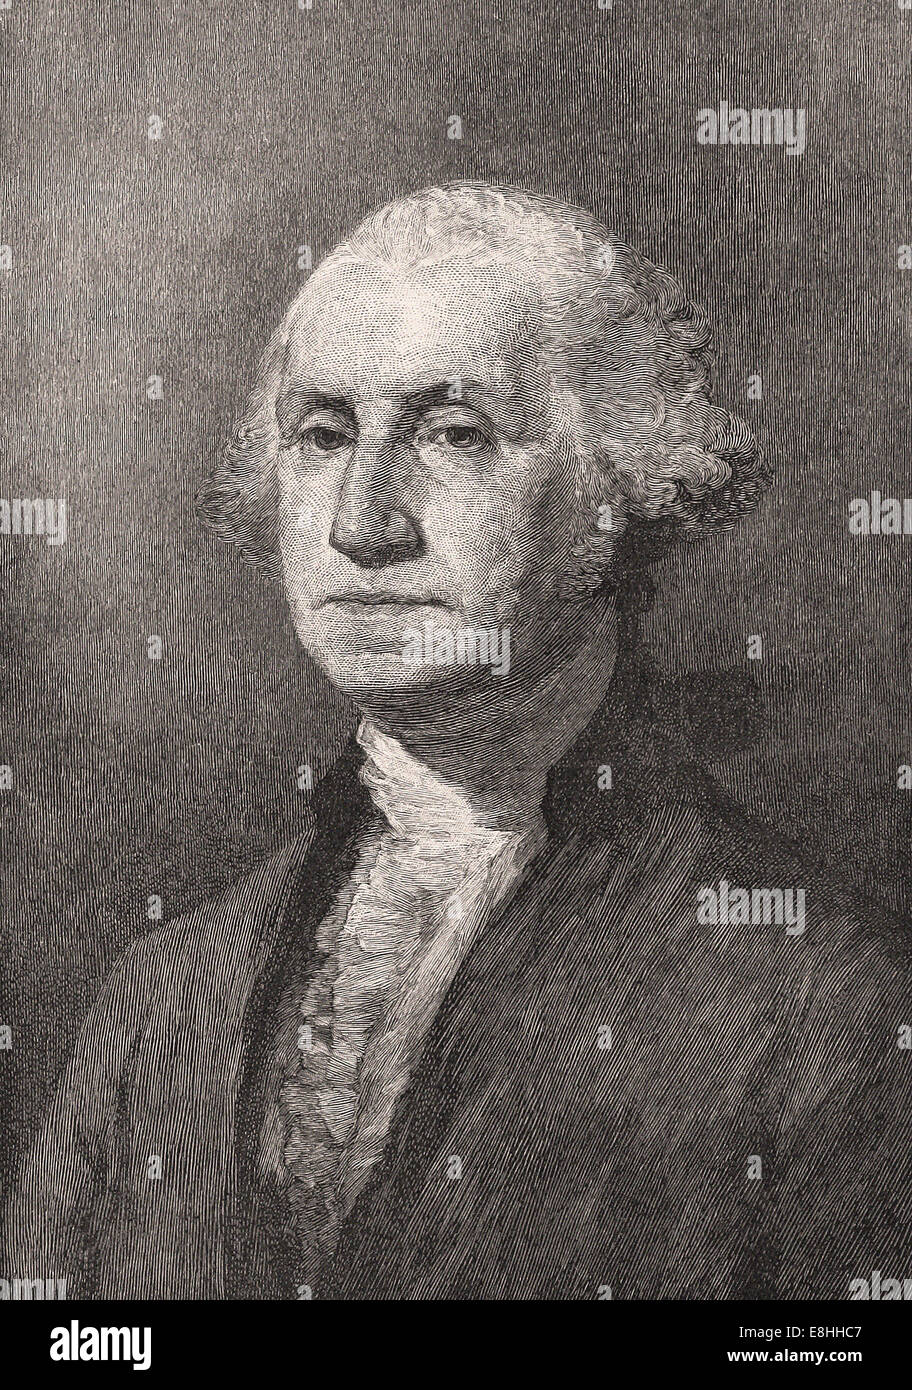 Porträt von George Washington - Gravur - XIX. Jahrhundert Stockfoto